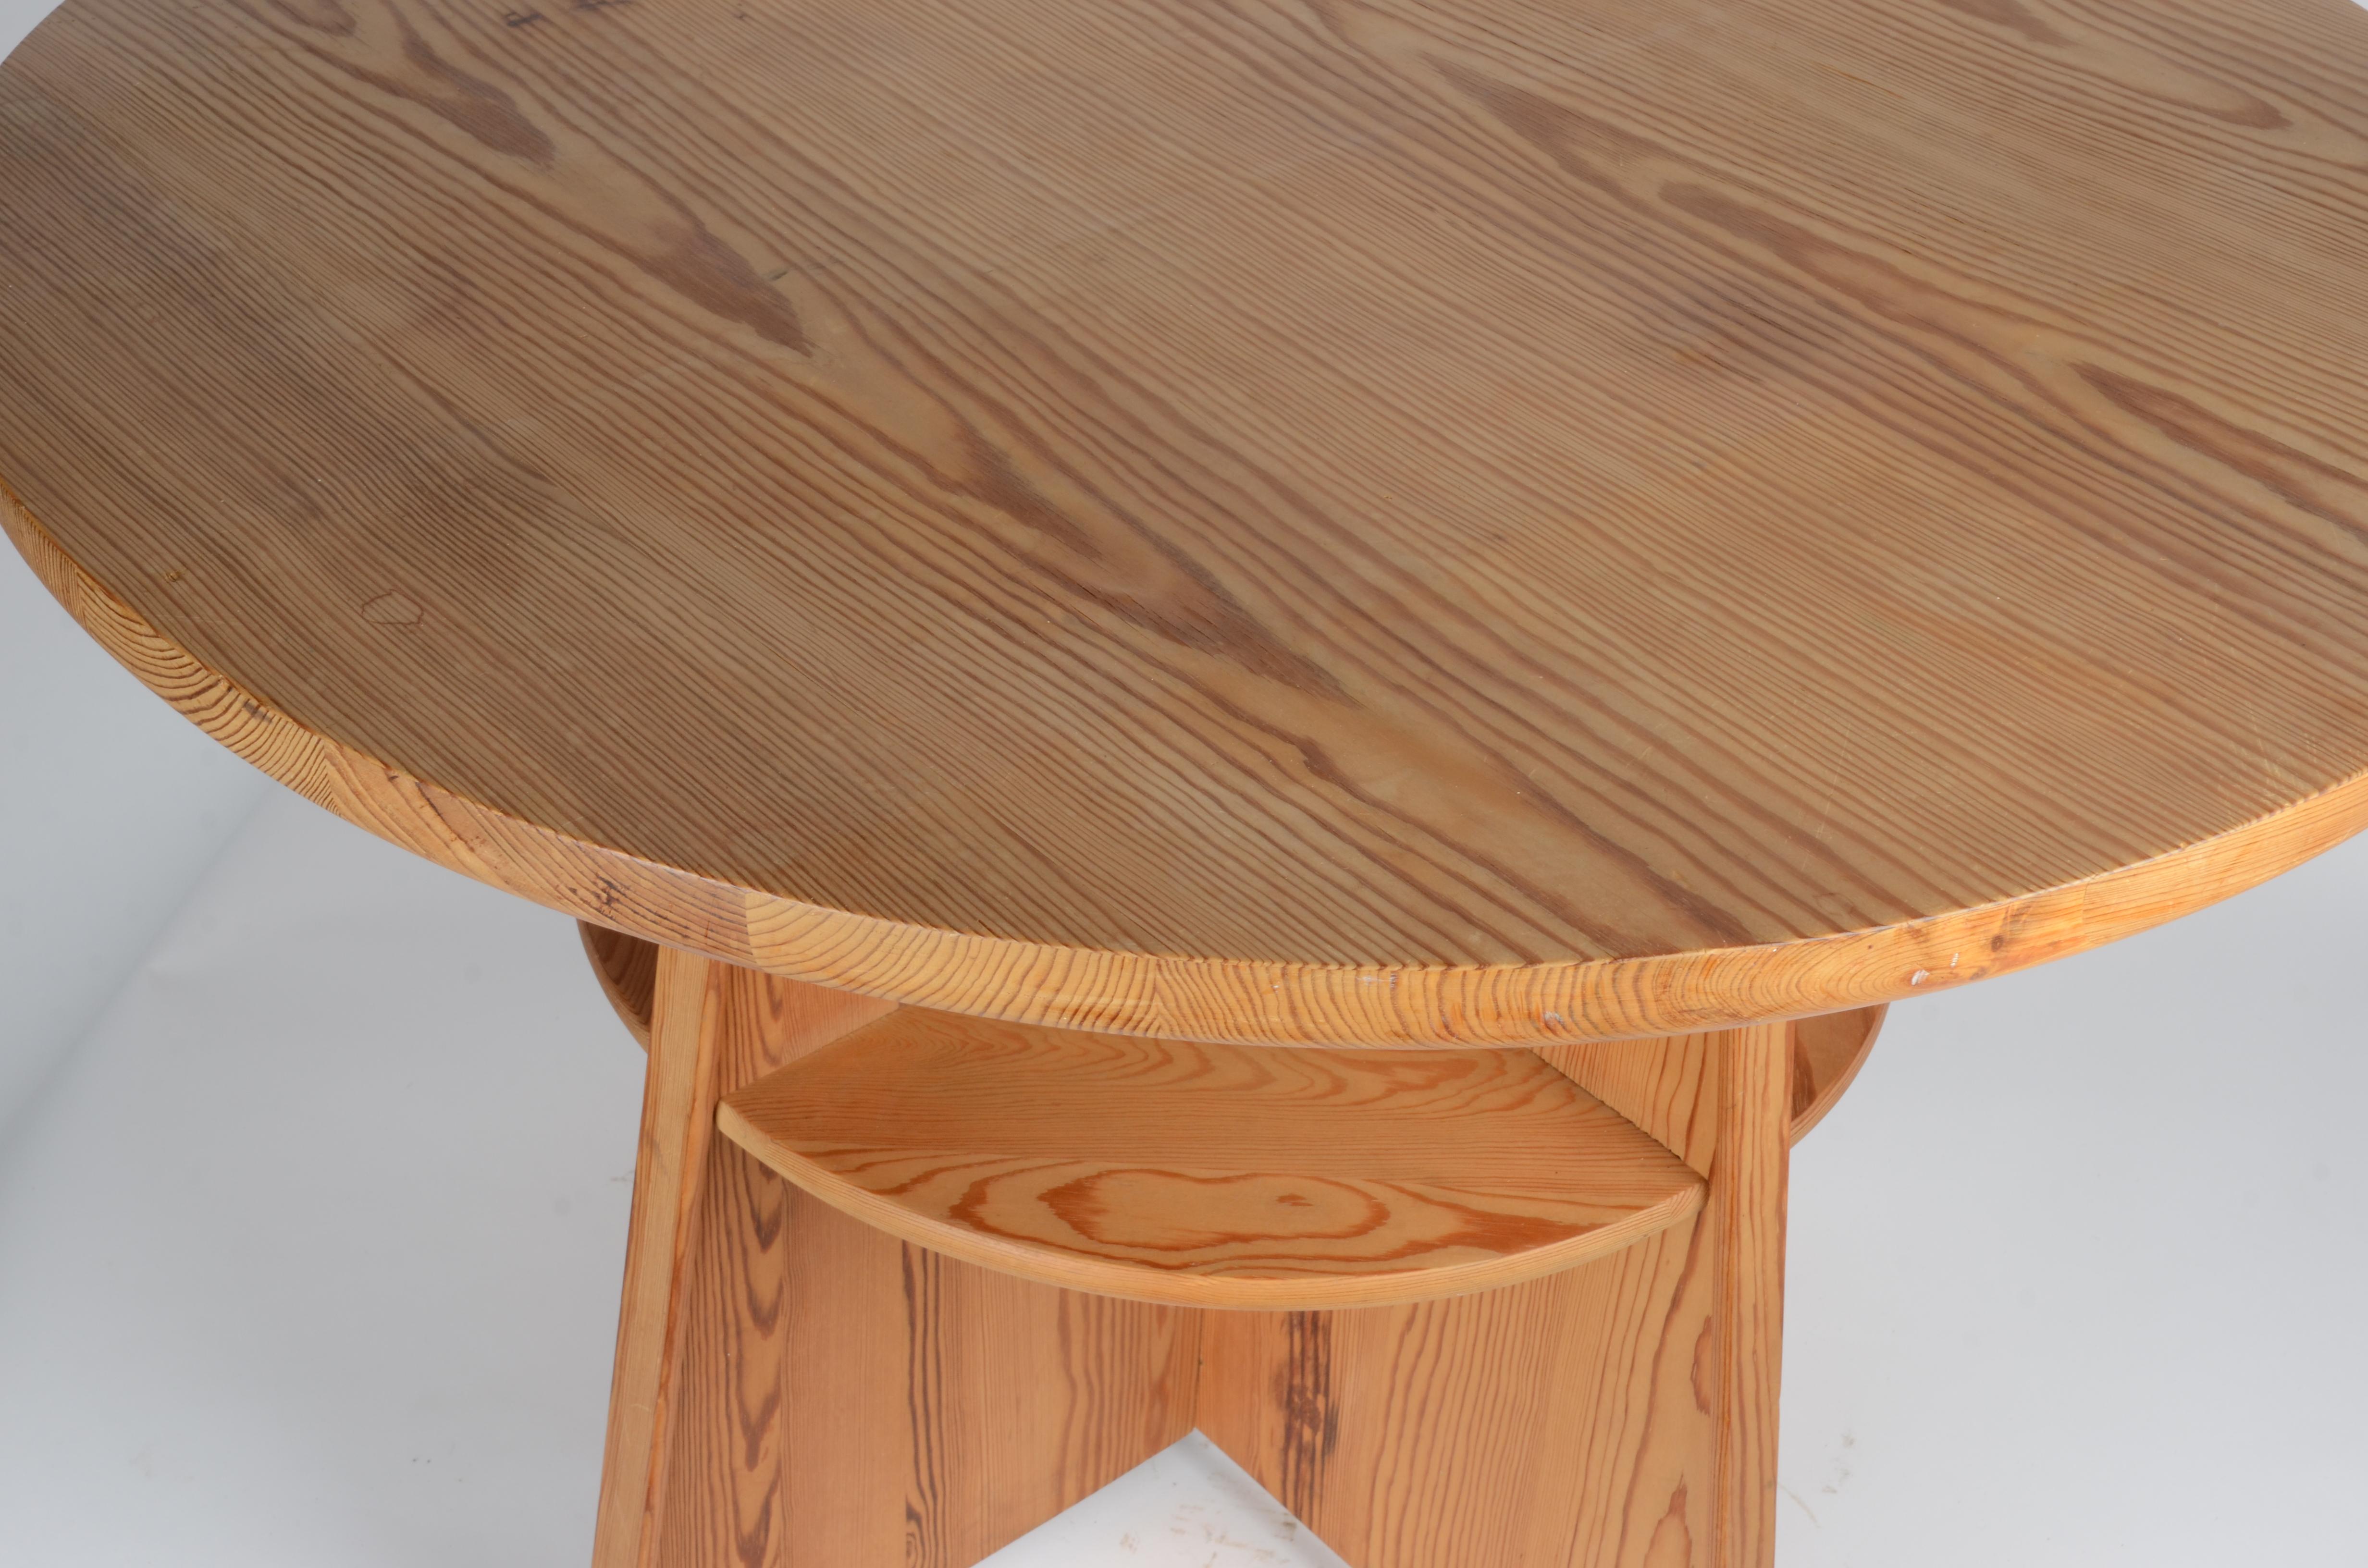 Table in pine designed by David Rosén, Sweden 1940/50s.